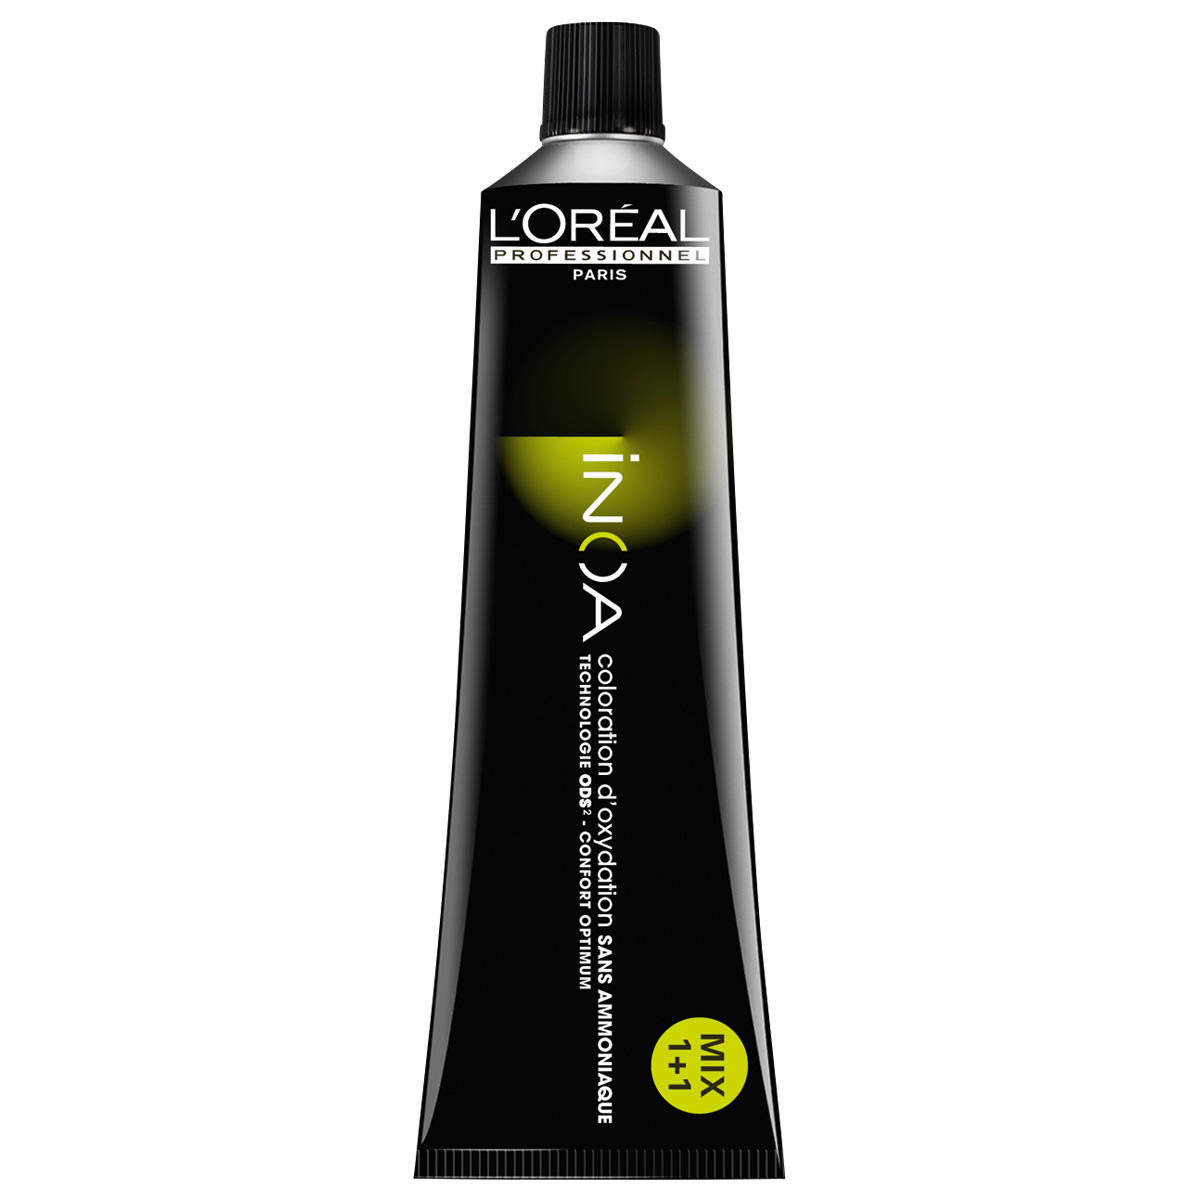 L'Oréal Professionnel Paris Coloration 7,43 Rubio medio cobrizo dorado, tubo 60 ml - 1